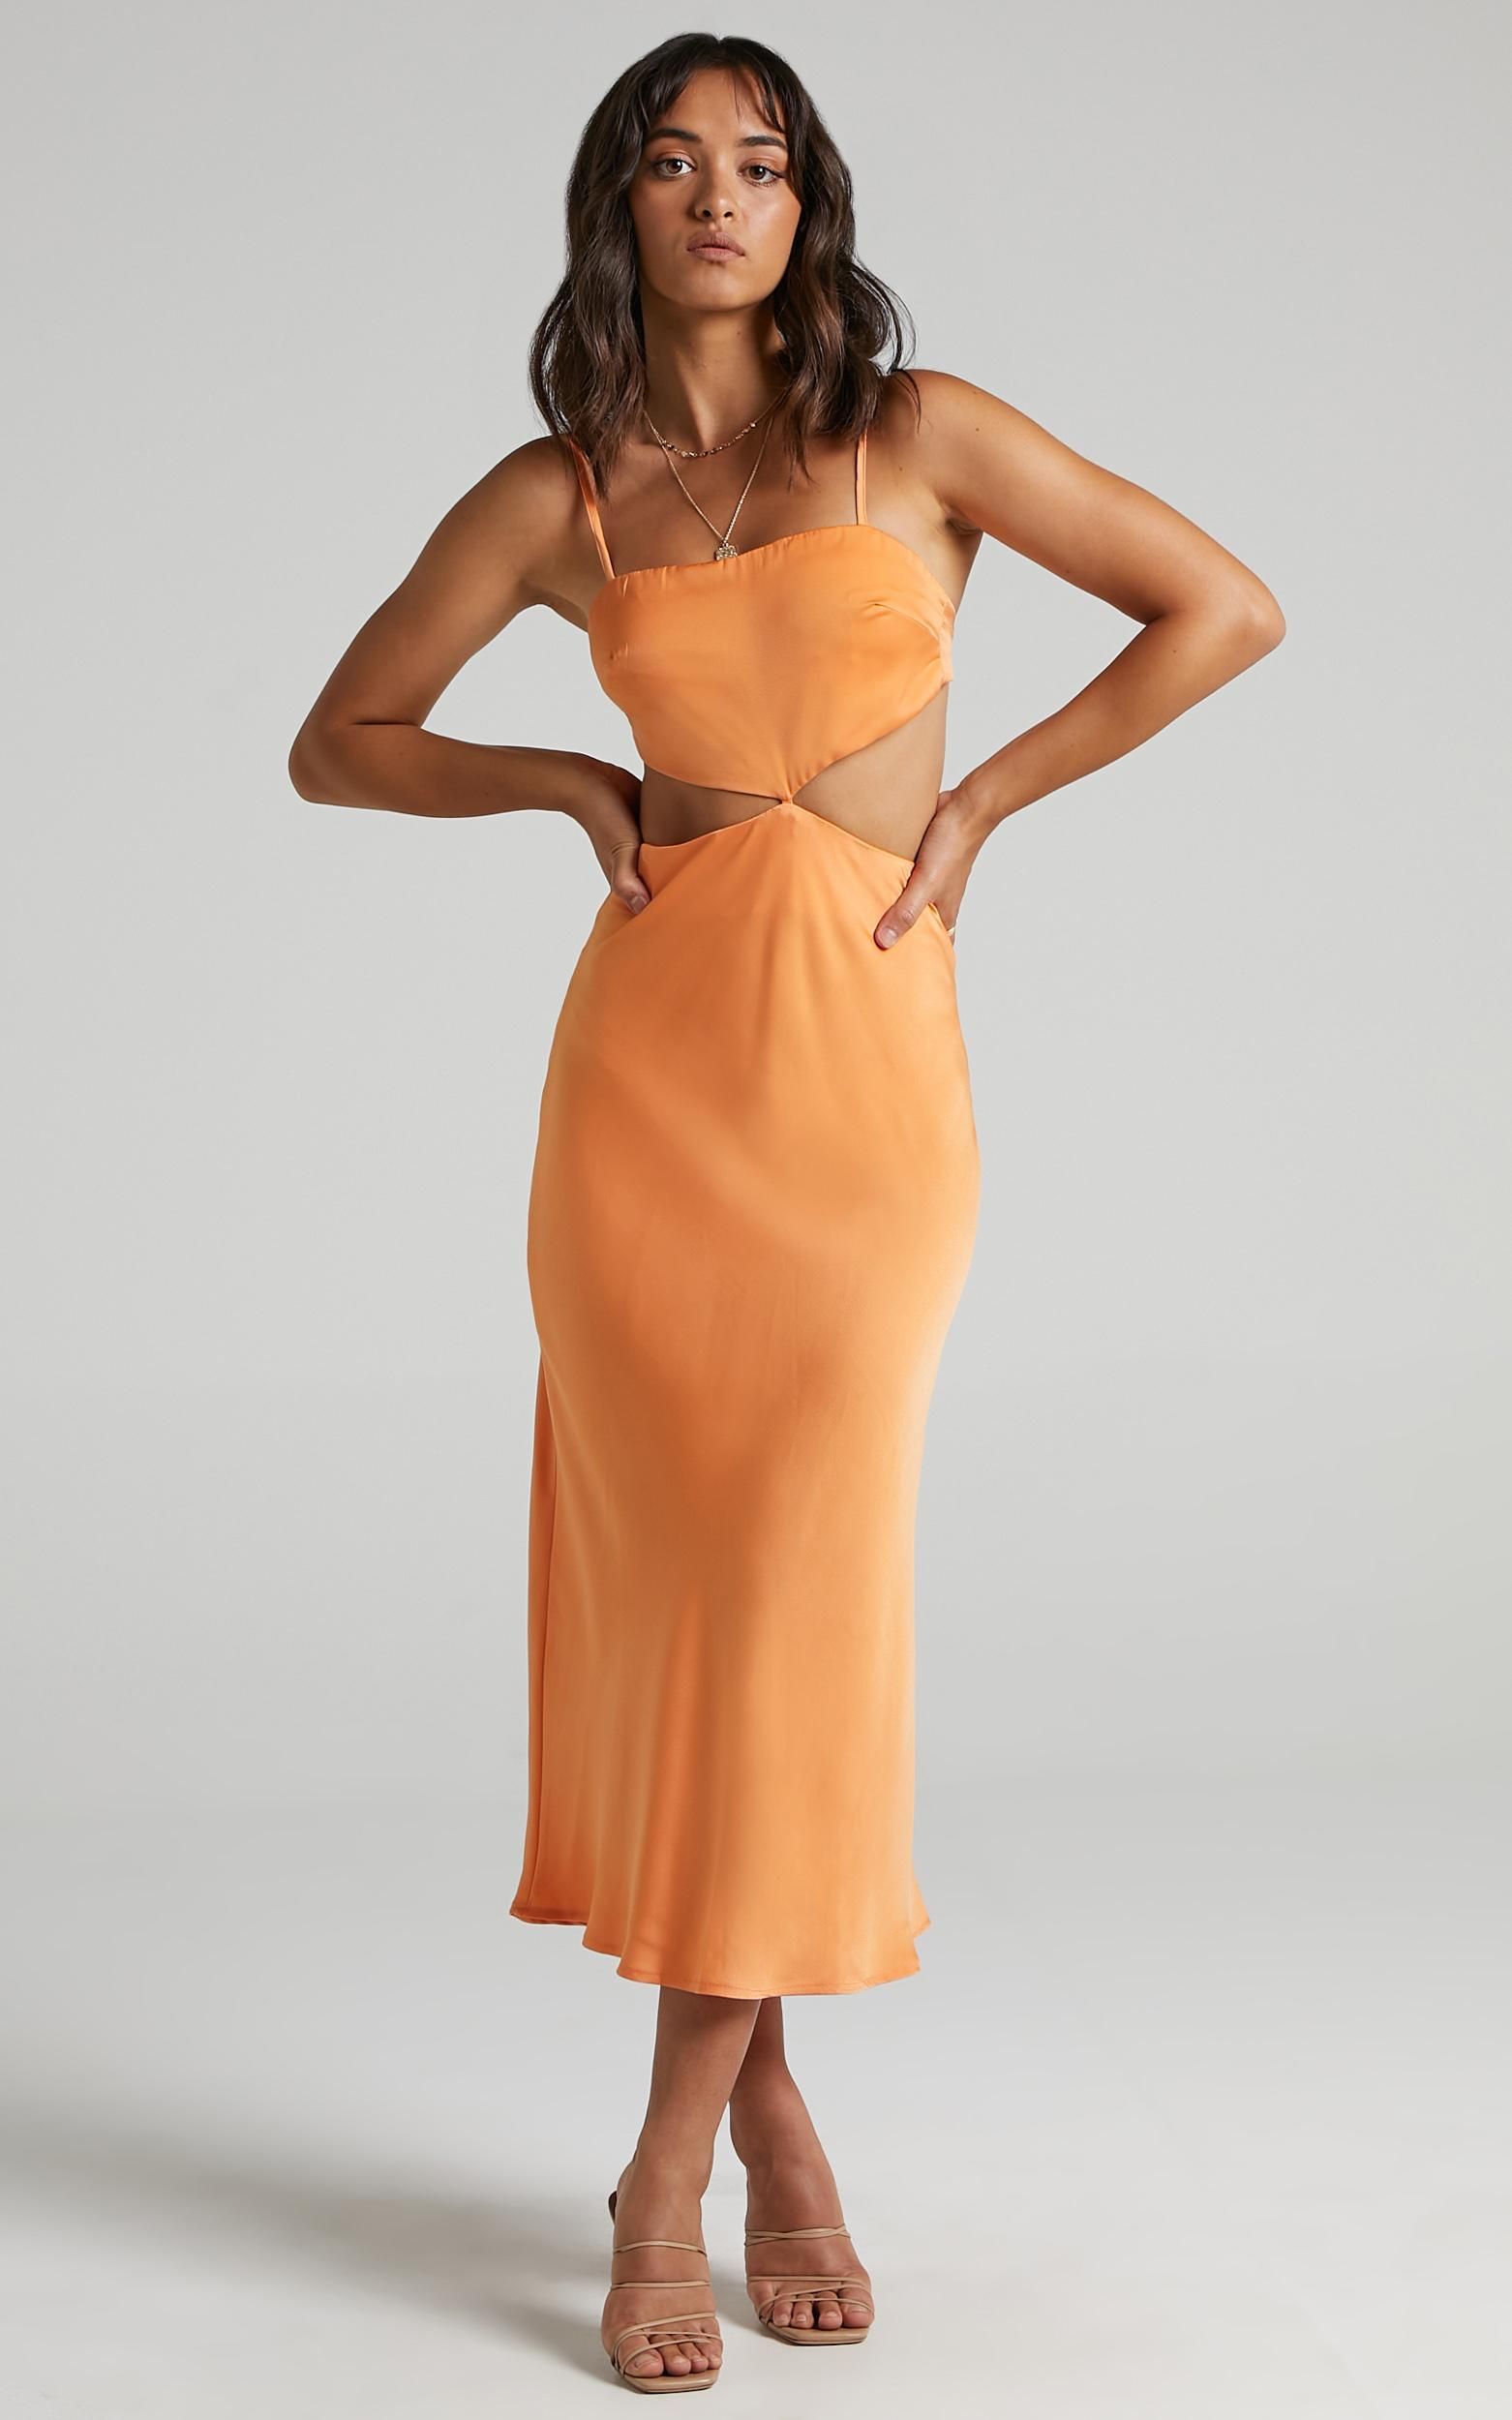 Kerley Dress in Orange | Showpo - deactived